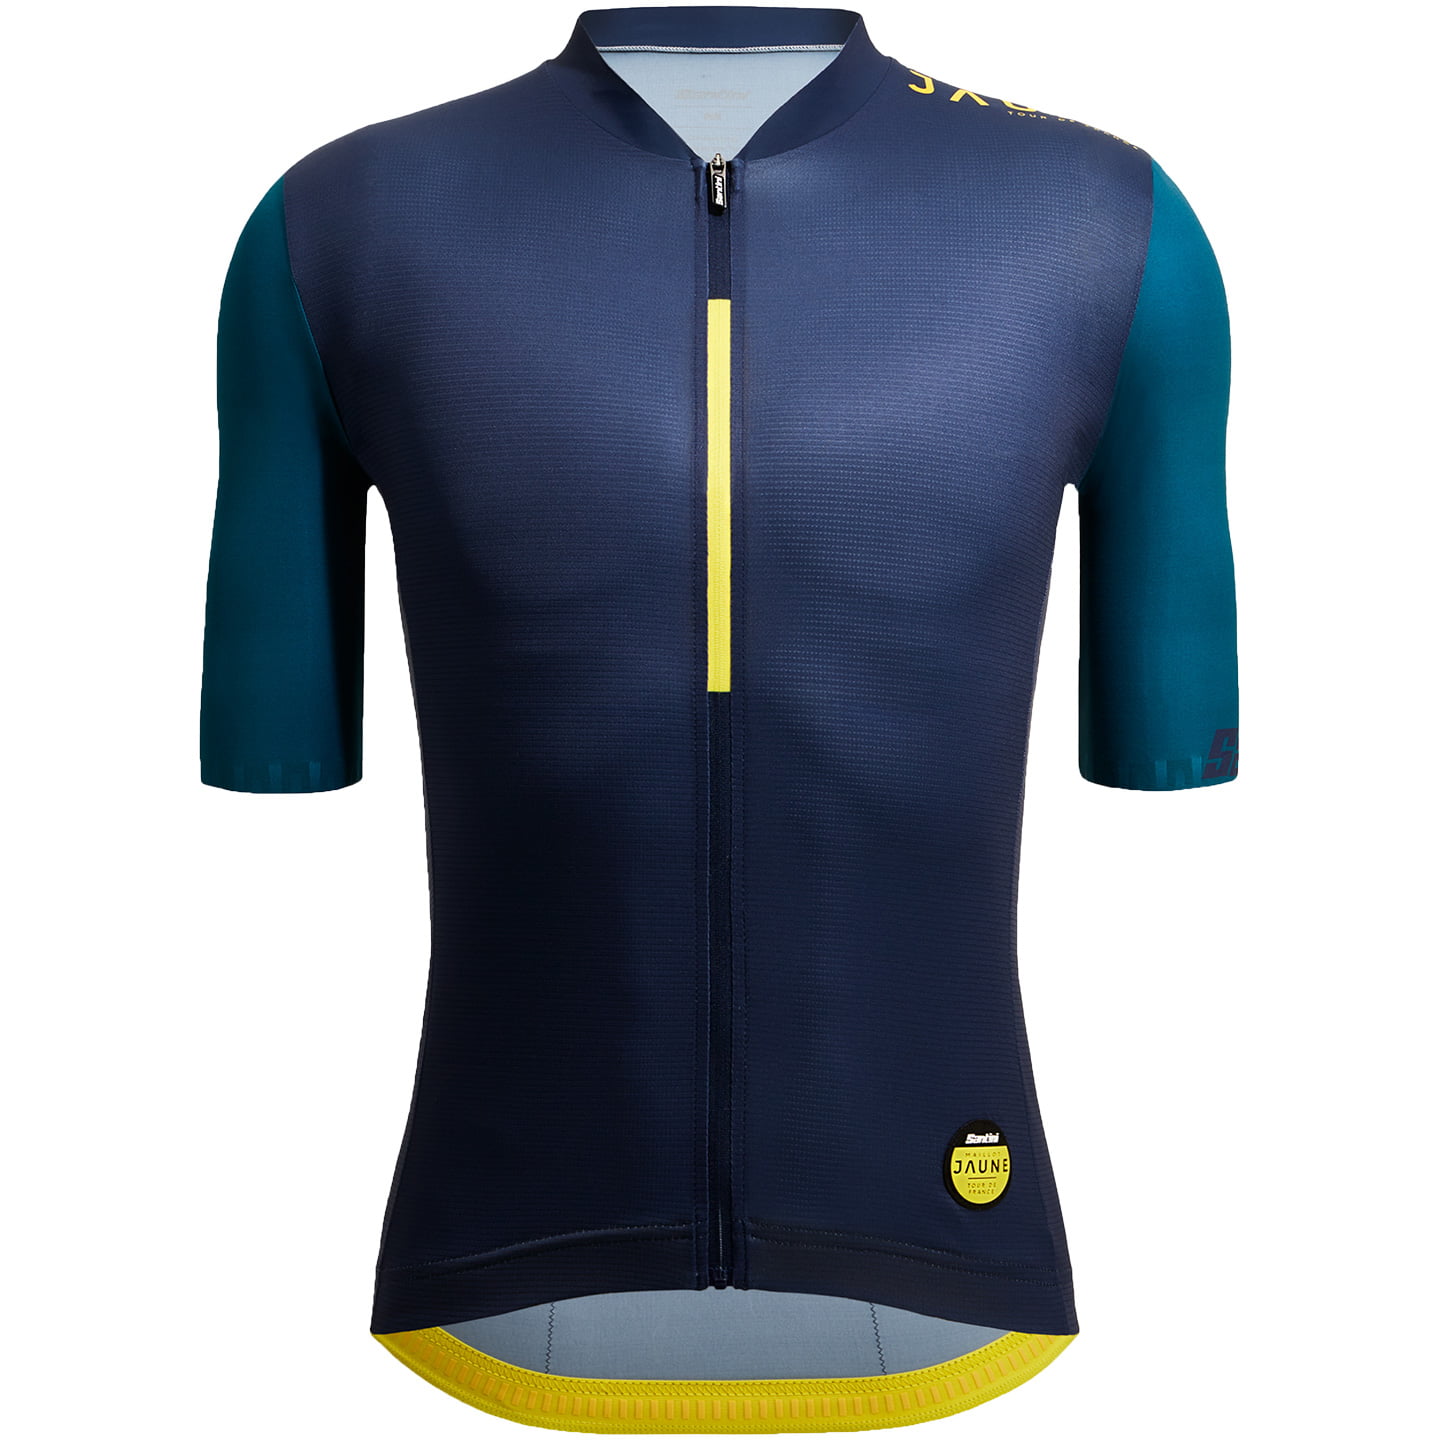 TOUR DE FRANCE Le Maillot Jaune Allez 2024 Short Sleeve Jersey, for men, size M, Cycle jersey, Cycling clothing